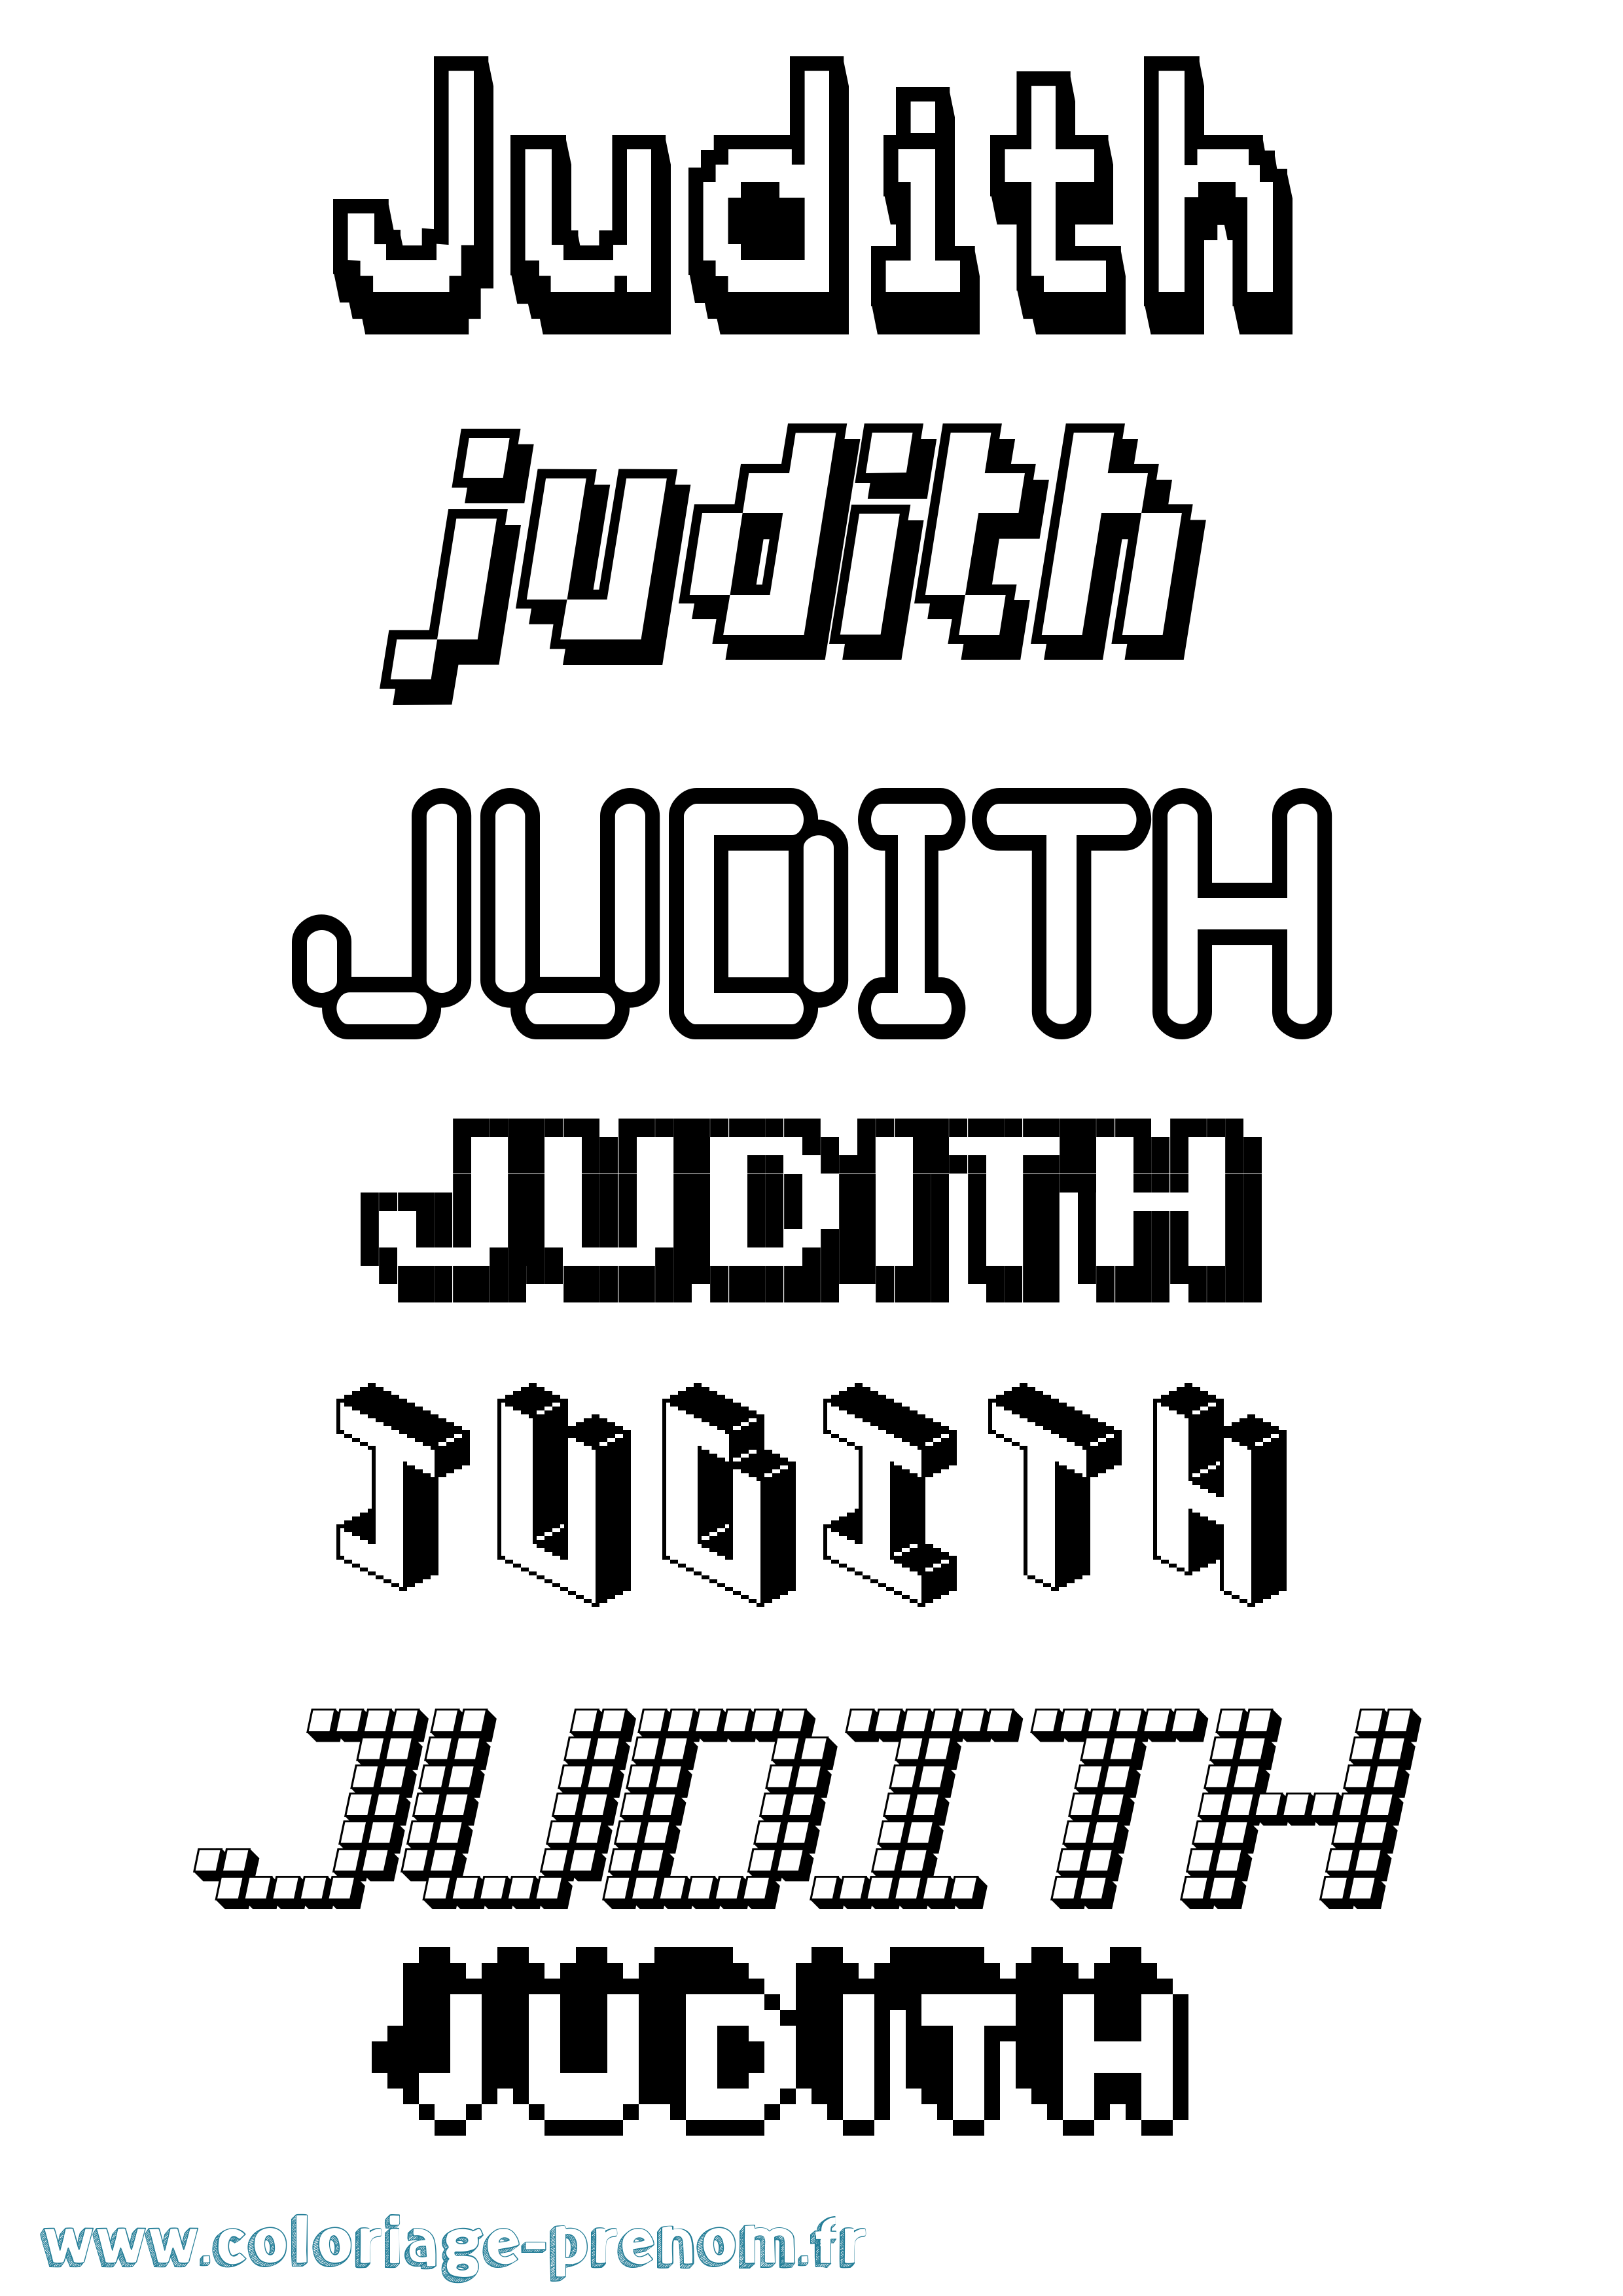 Coloriage prénom Judith Pixel